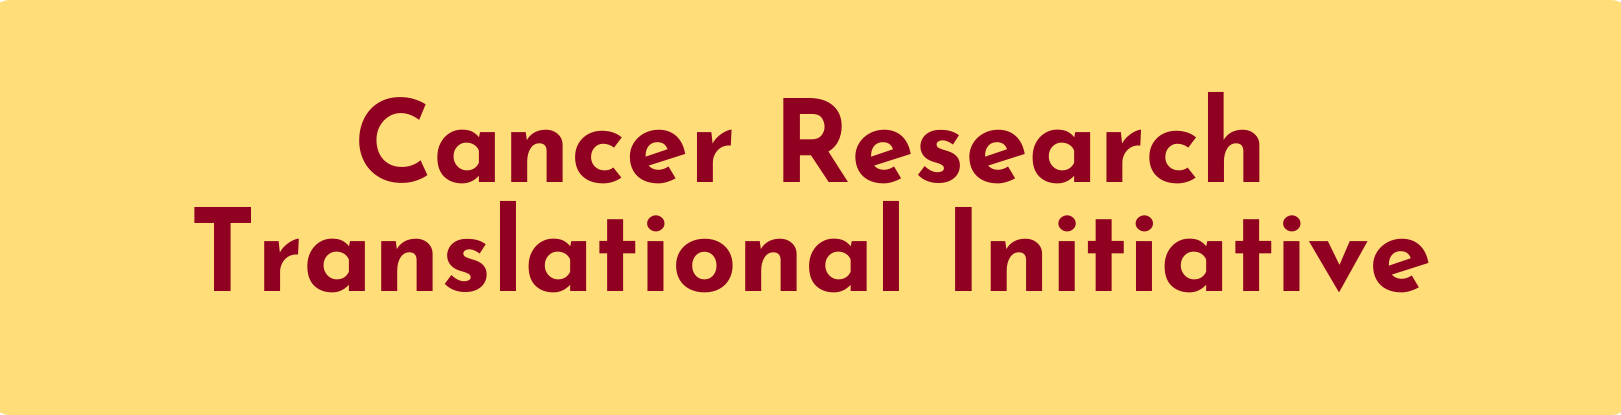 Cancer Research Translational Initiative